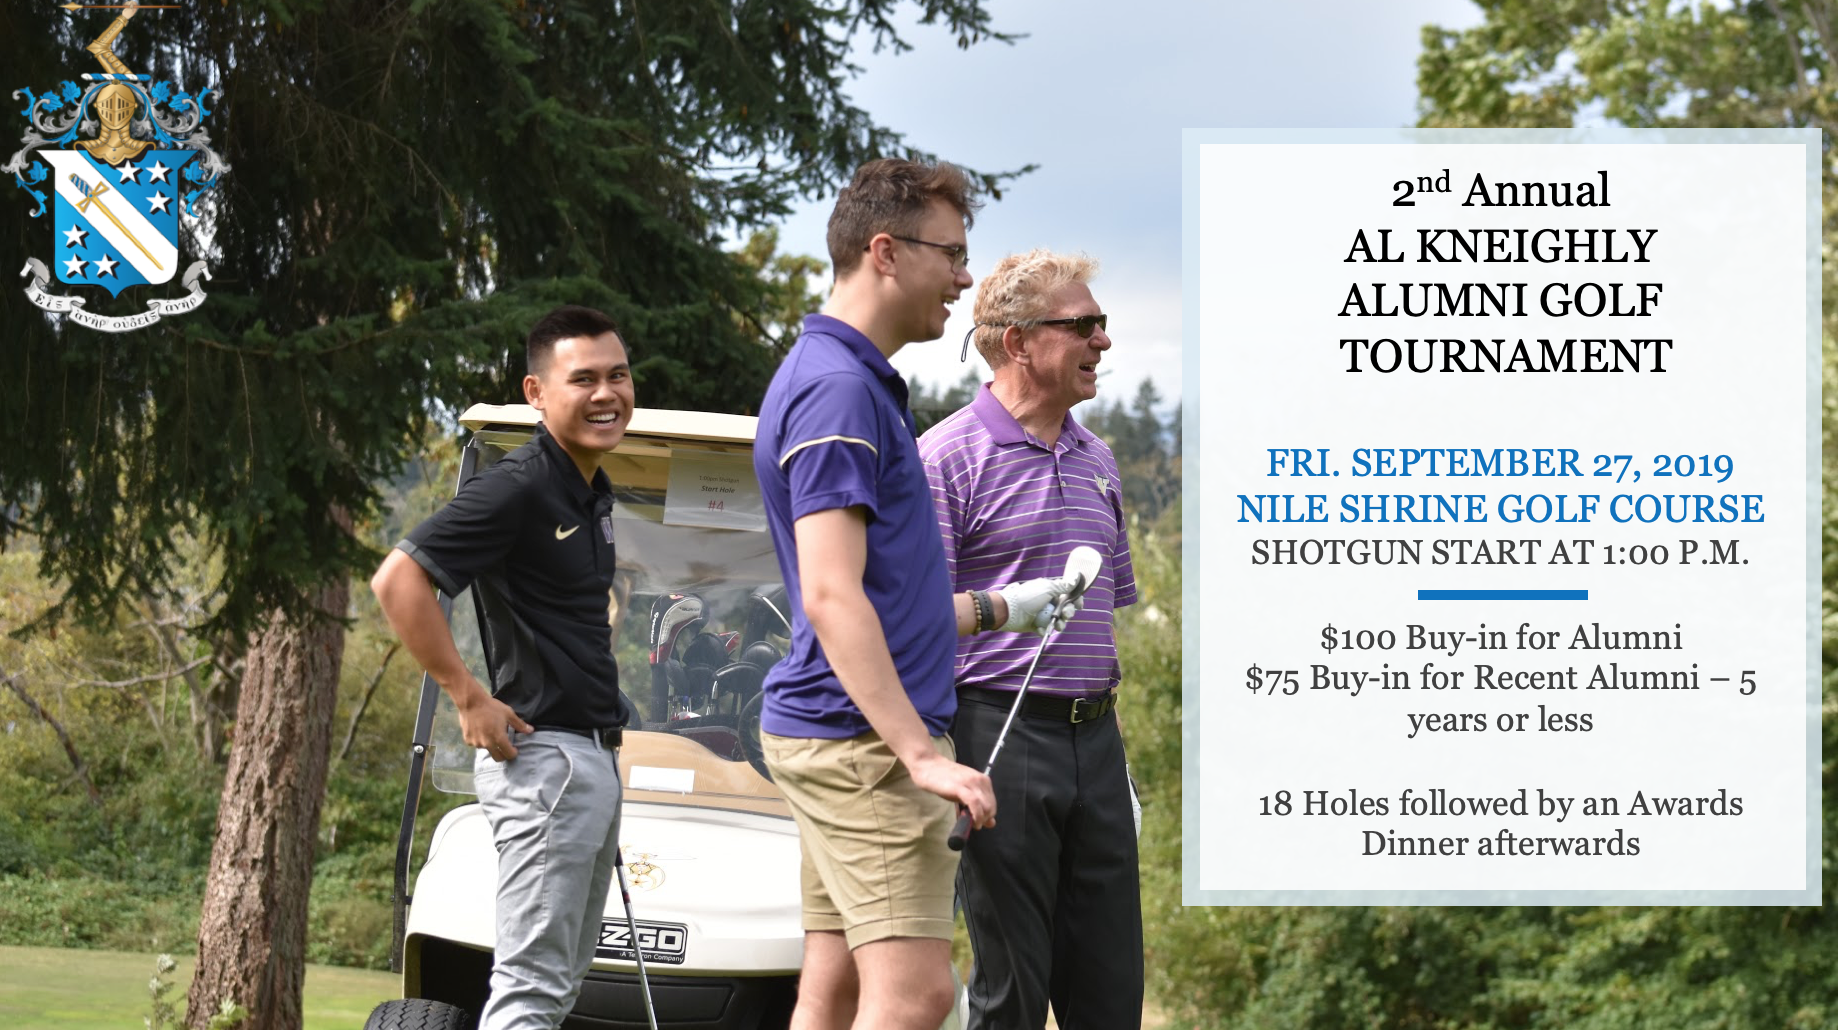 Second Annual Al Kneighly Alumni Golf Tournament